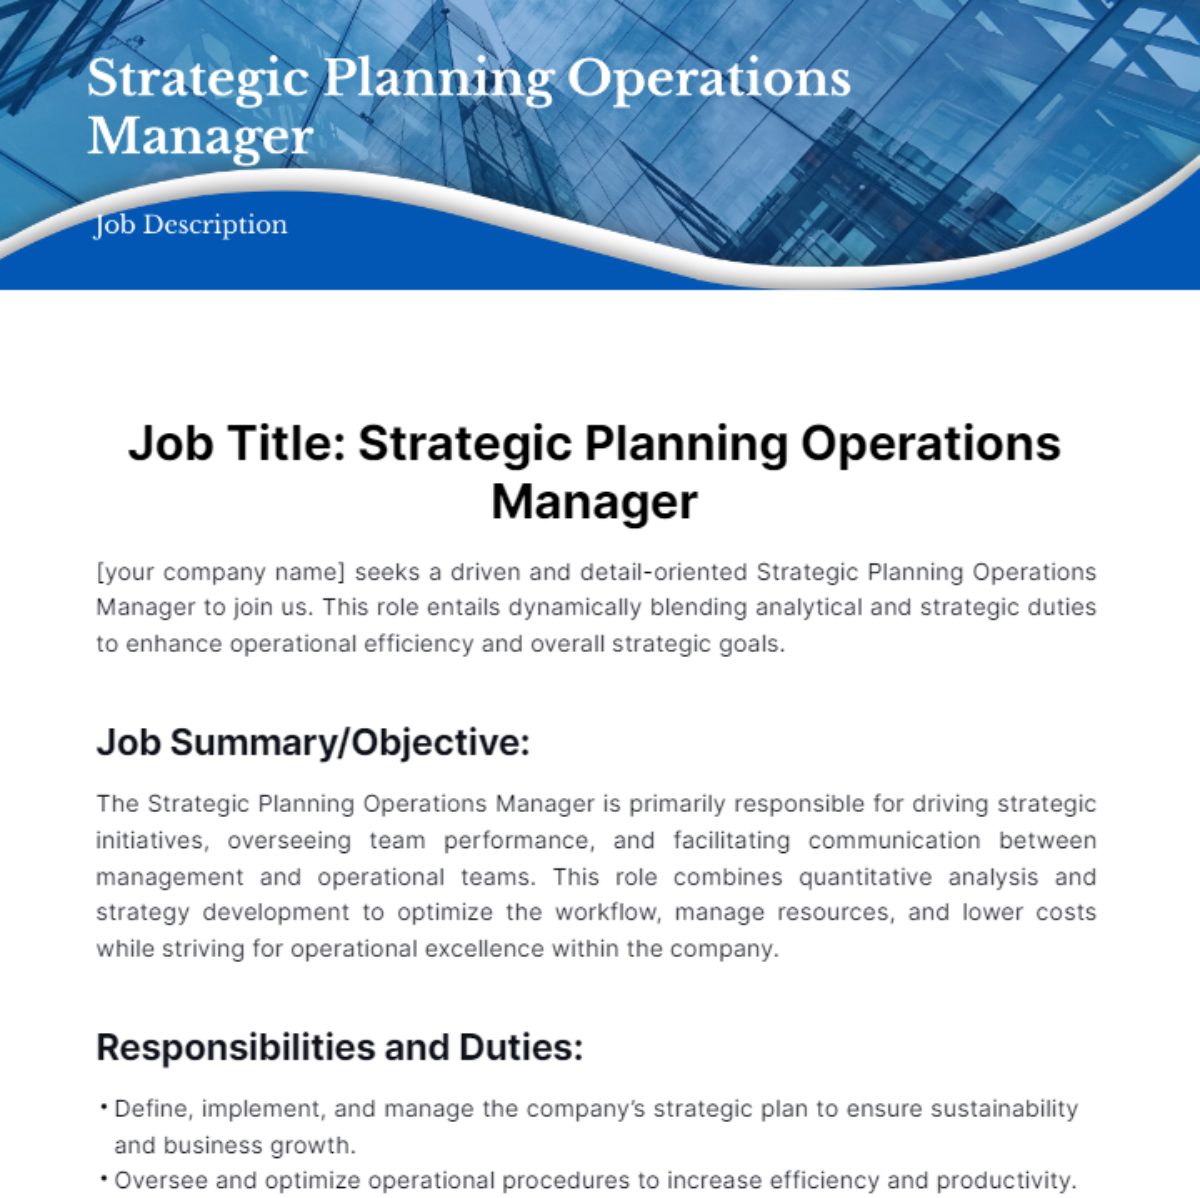 Strategic Planning Operations Manager Job Description Template